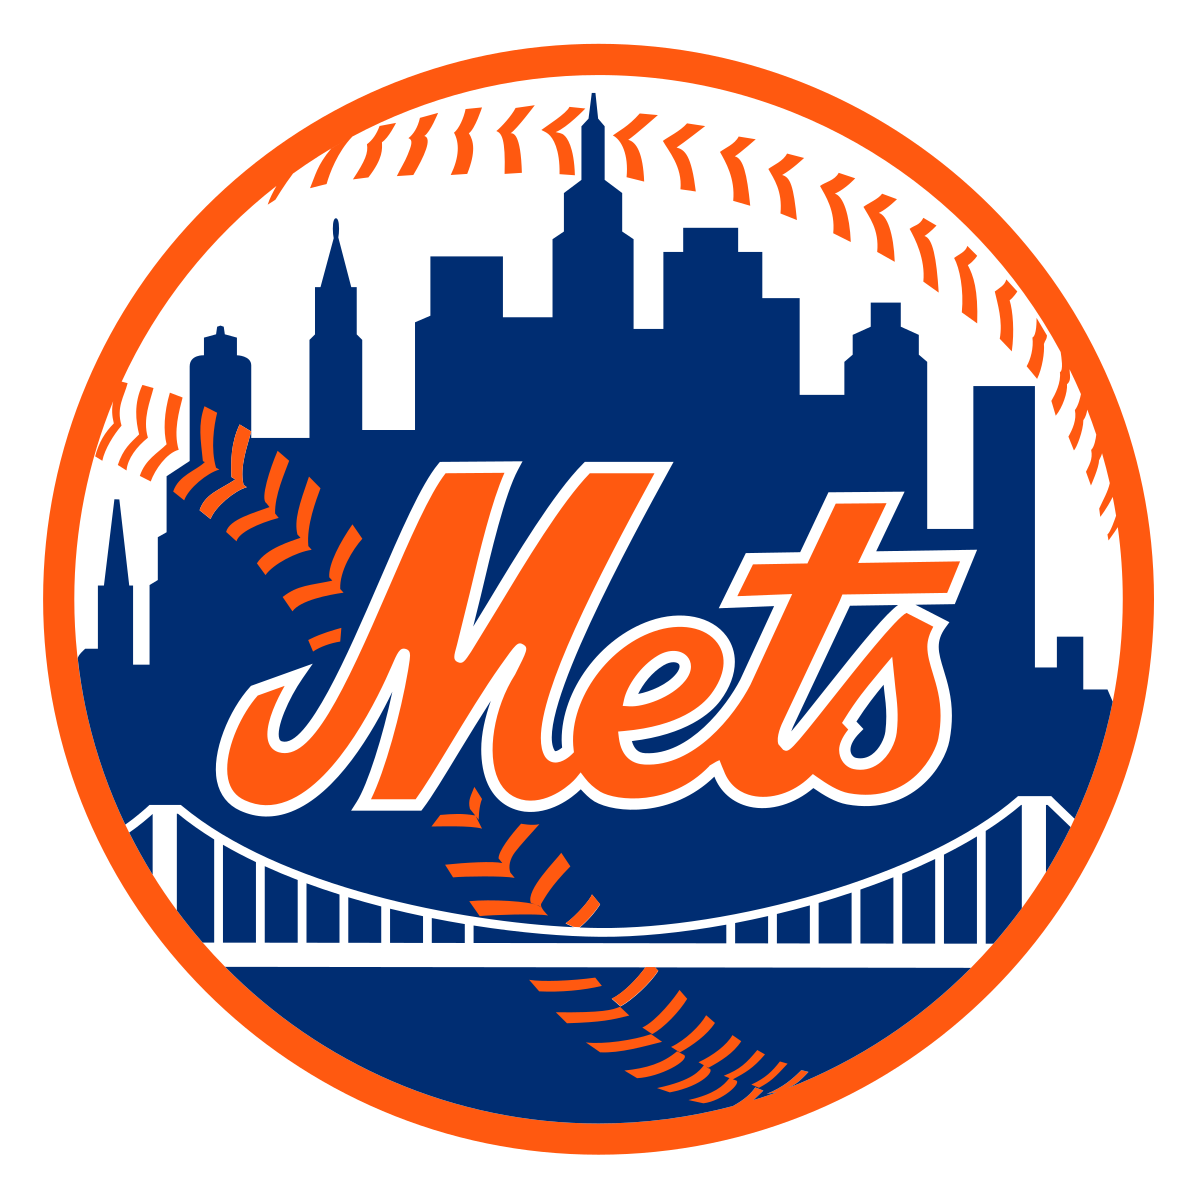 FOCO Releases 2021 Mets Black Jersey Bobbleheads - Metsmerized Online